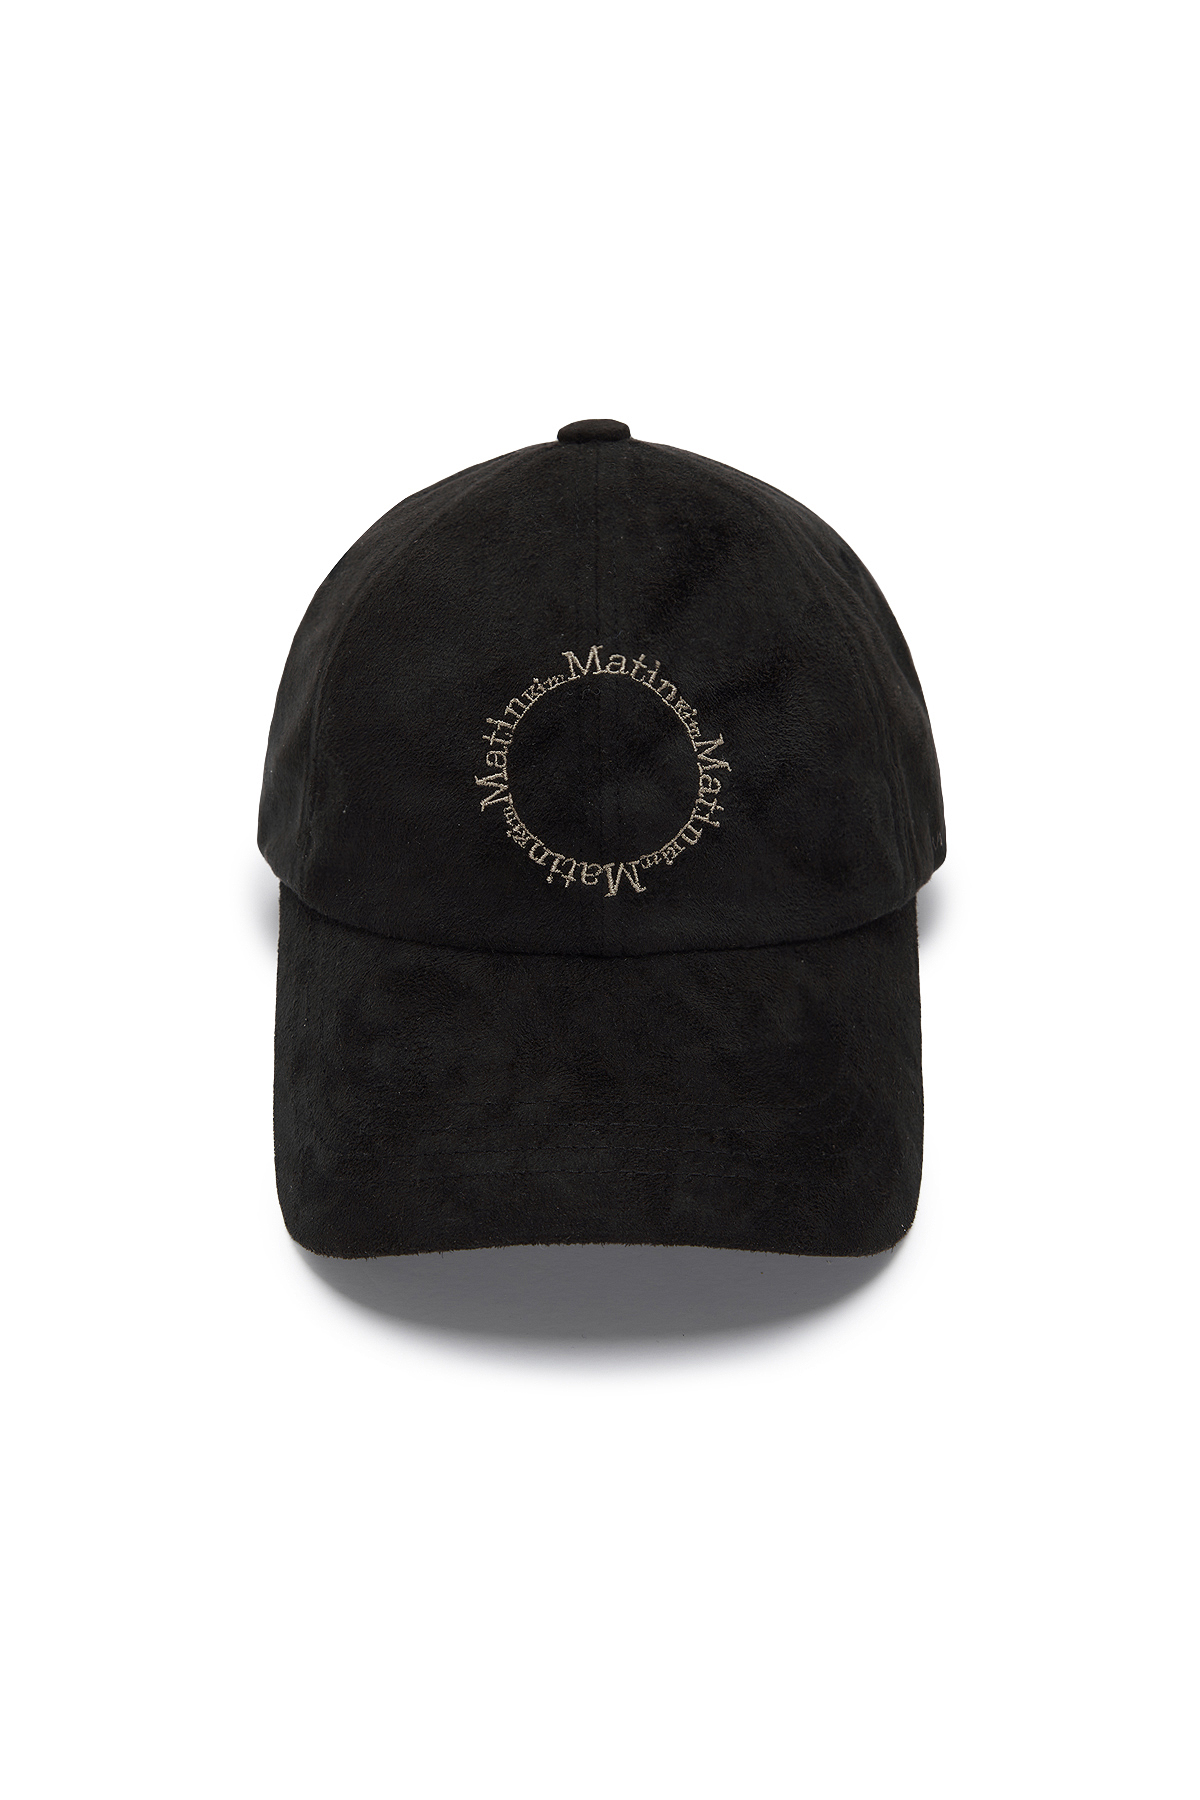 CIRCLE LOGO SUEDE BALL CAP IN BLACK